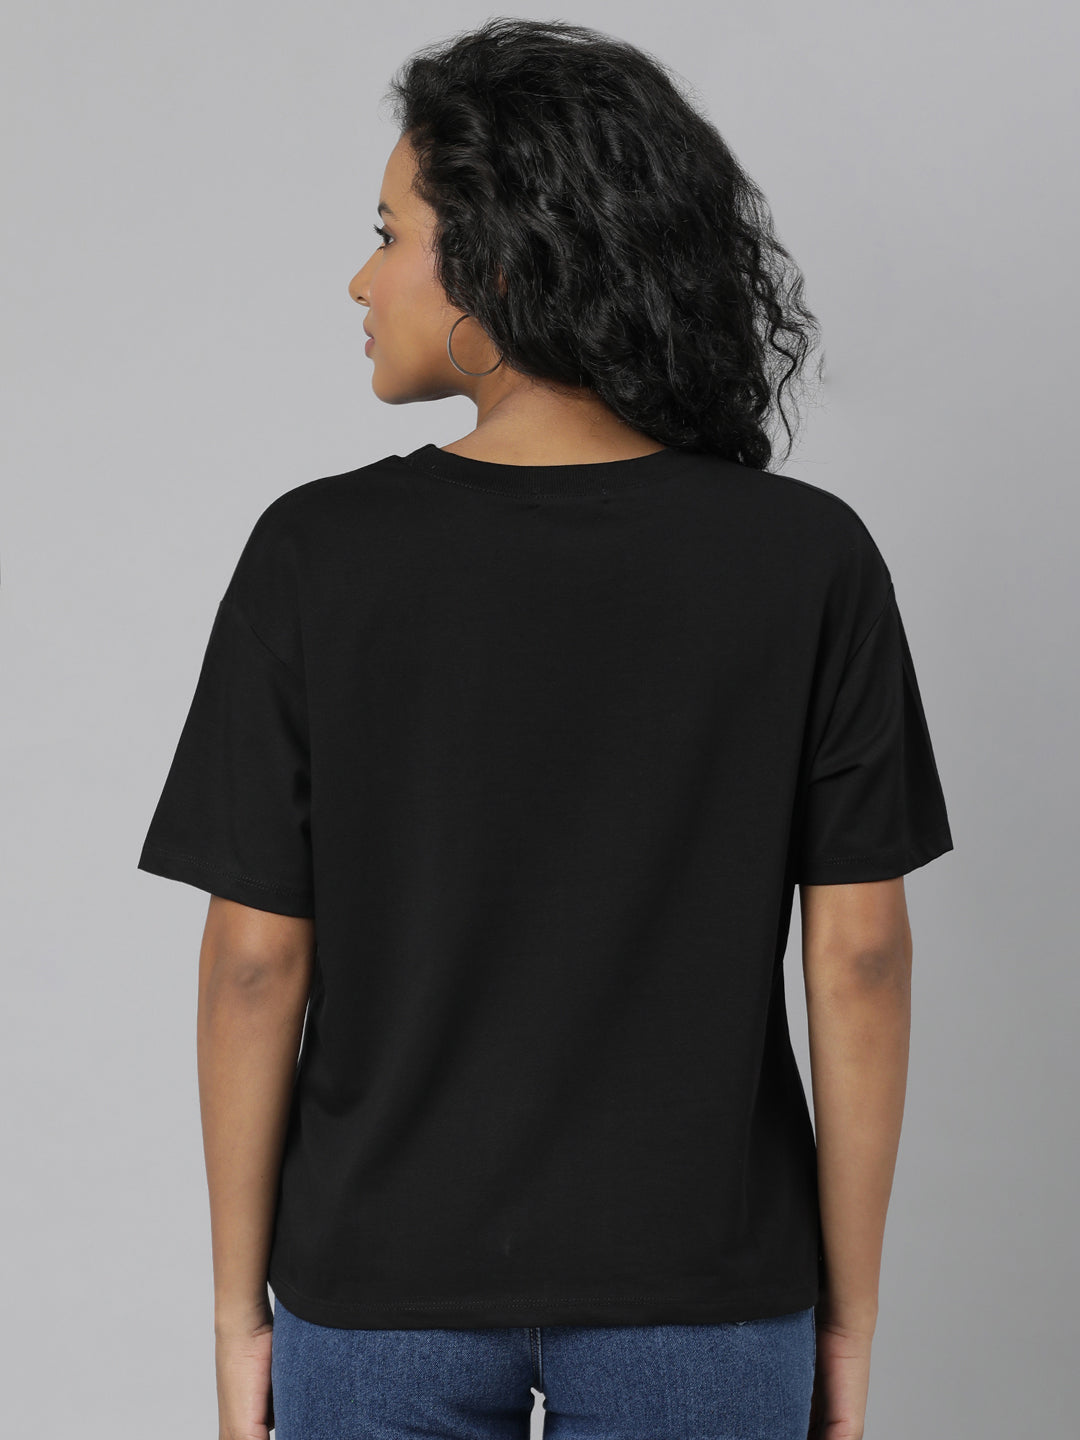 Women Solid Black T Shirt